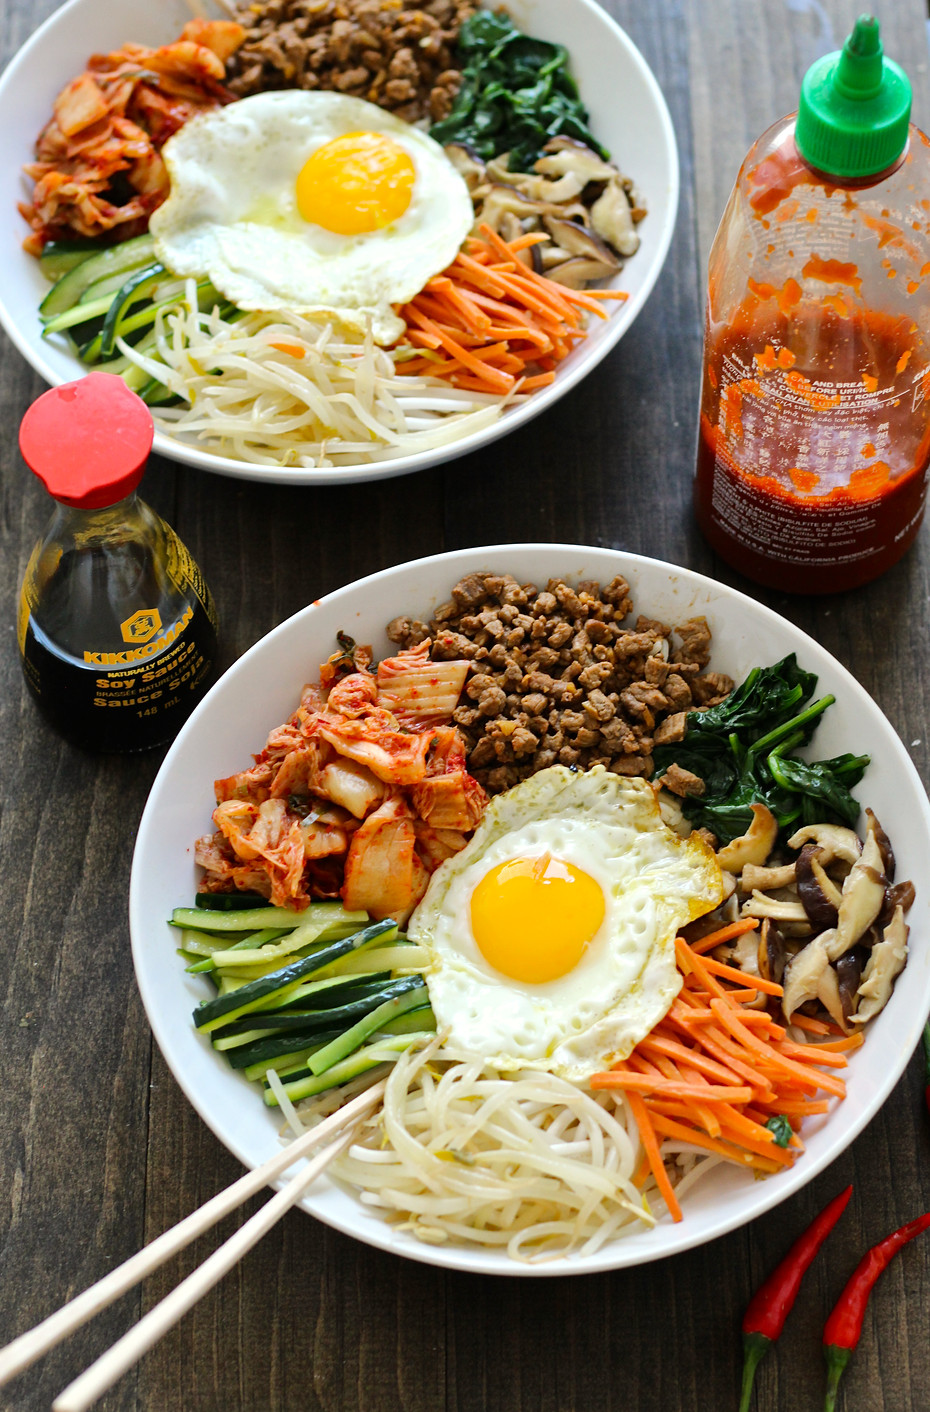 Healthy Korean Food Recipes
 Best 25 Healthy korean recipes ideas on Pinterest